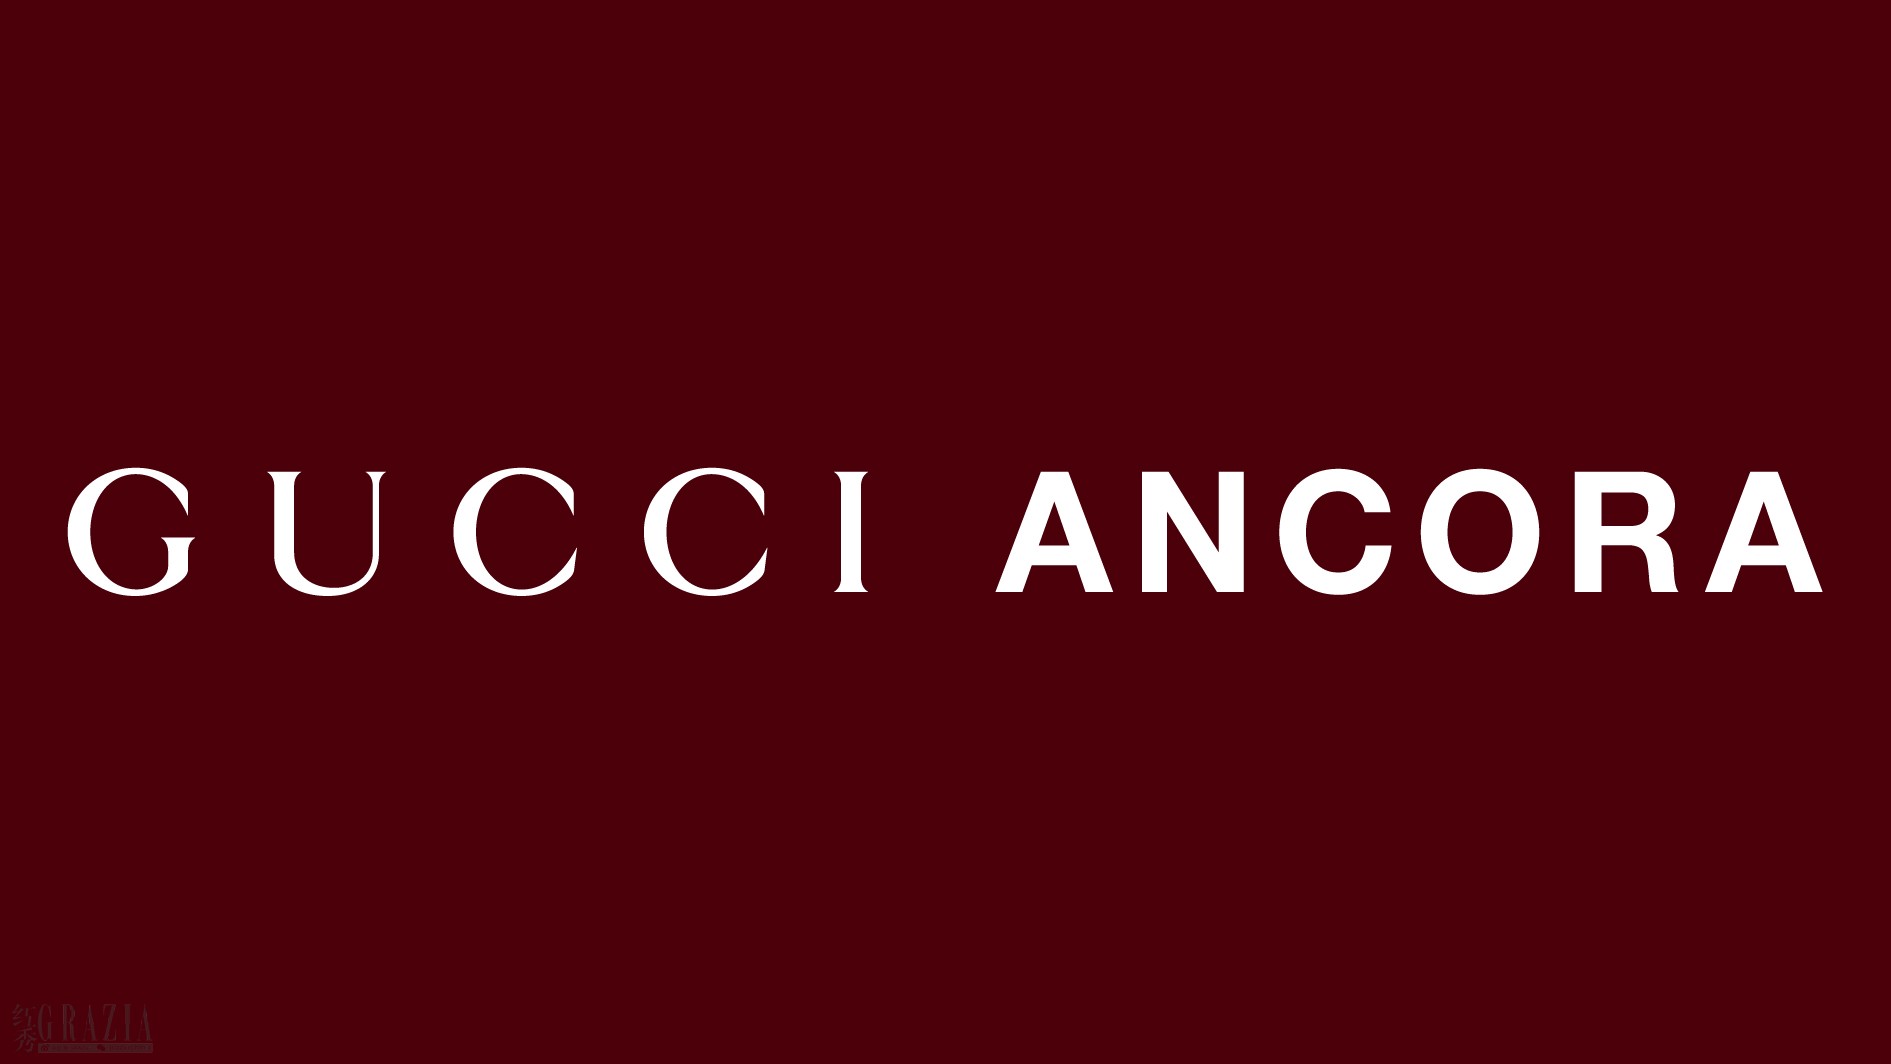 Gucci Ancora 160X90mm.jpg